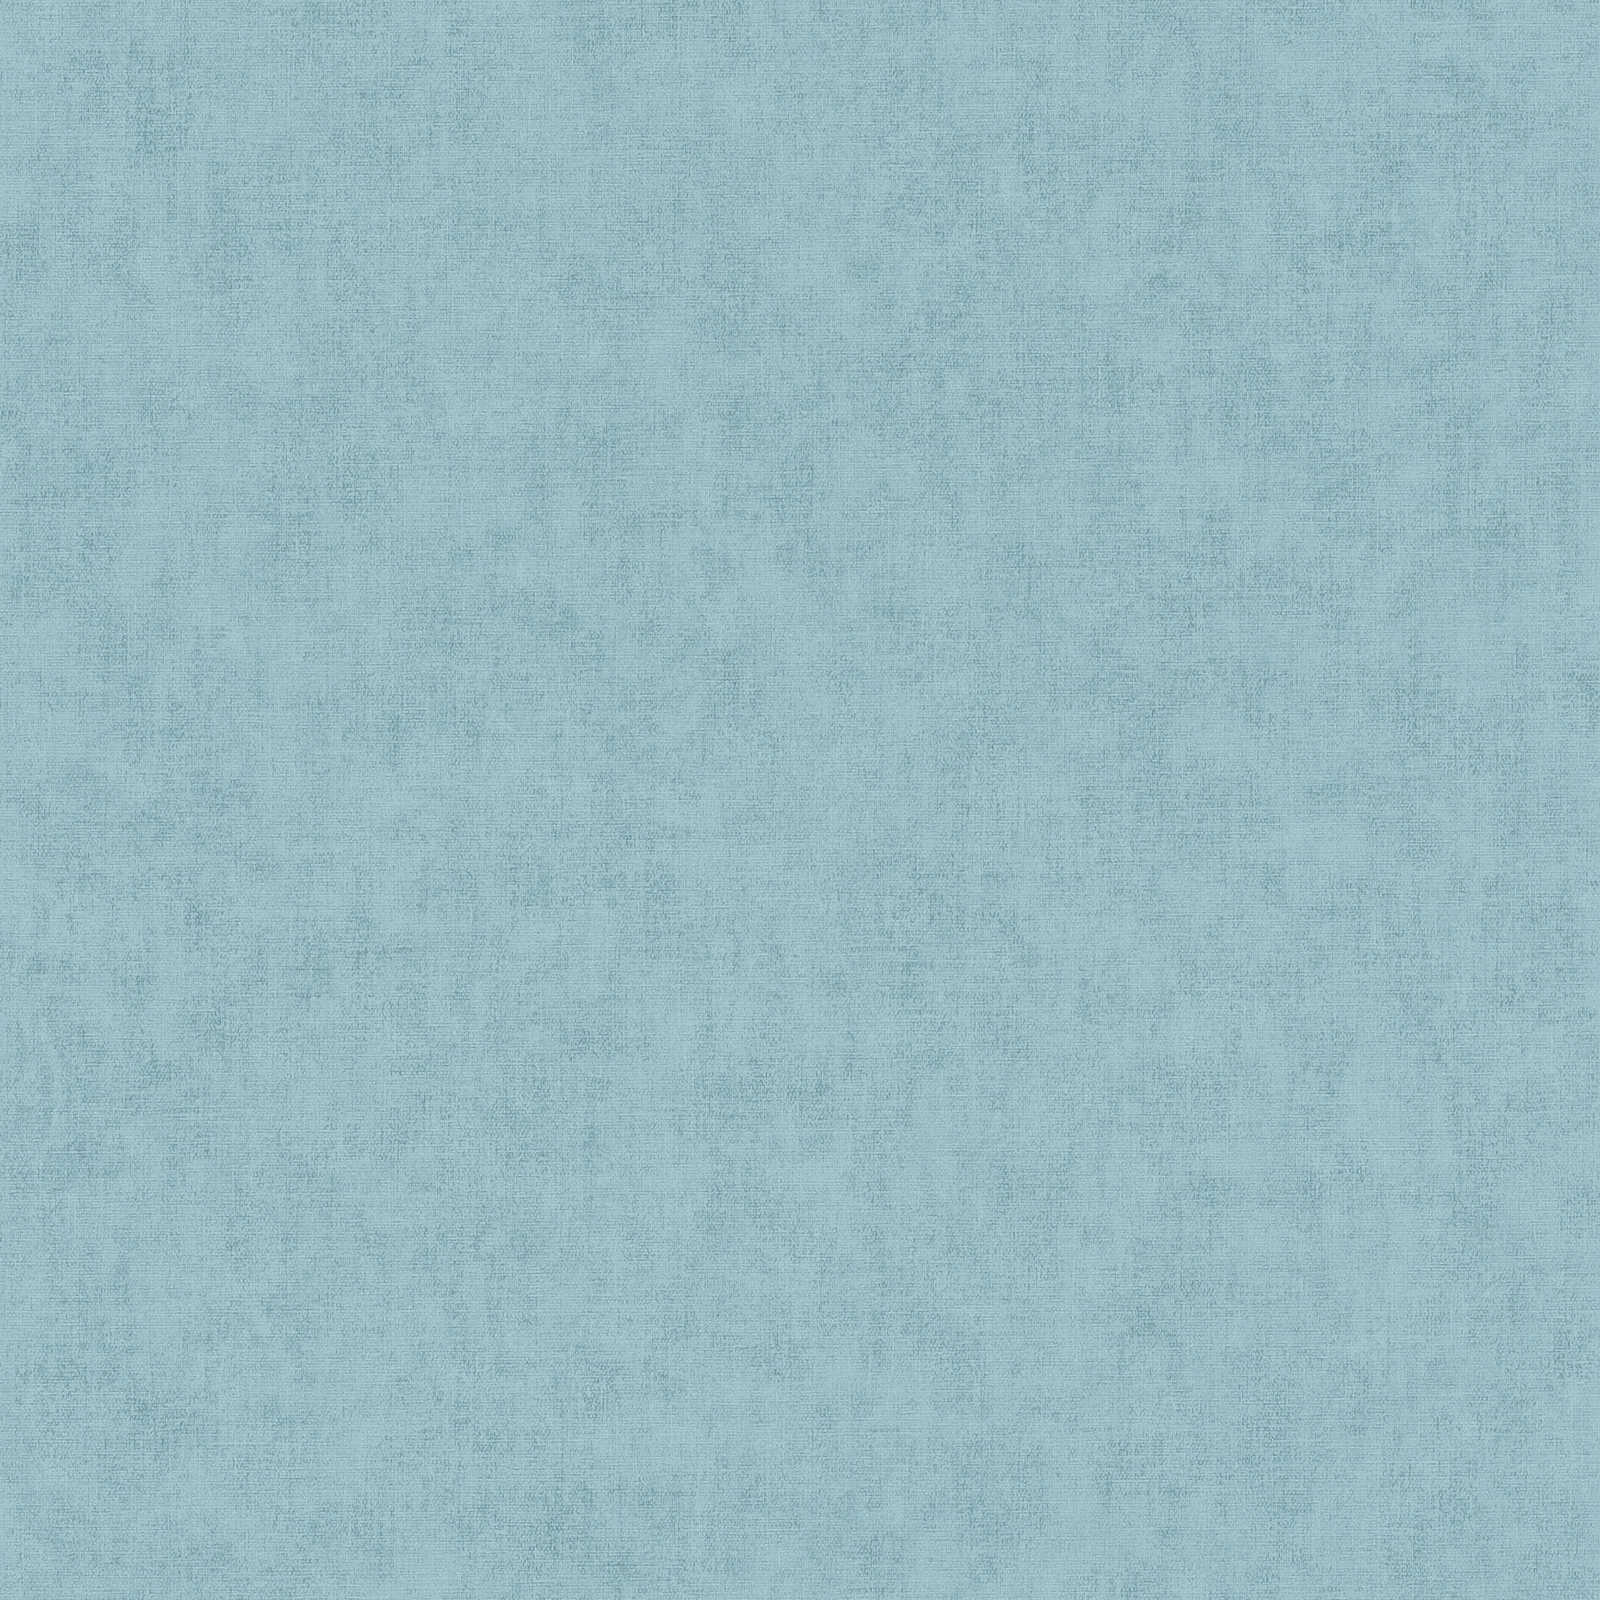 Carta da parati a tinta unita, effetto lino e stile scandinavo - blu
